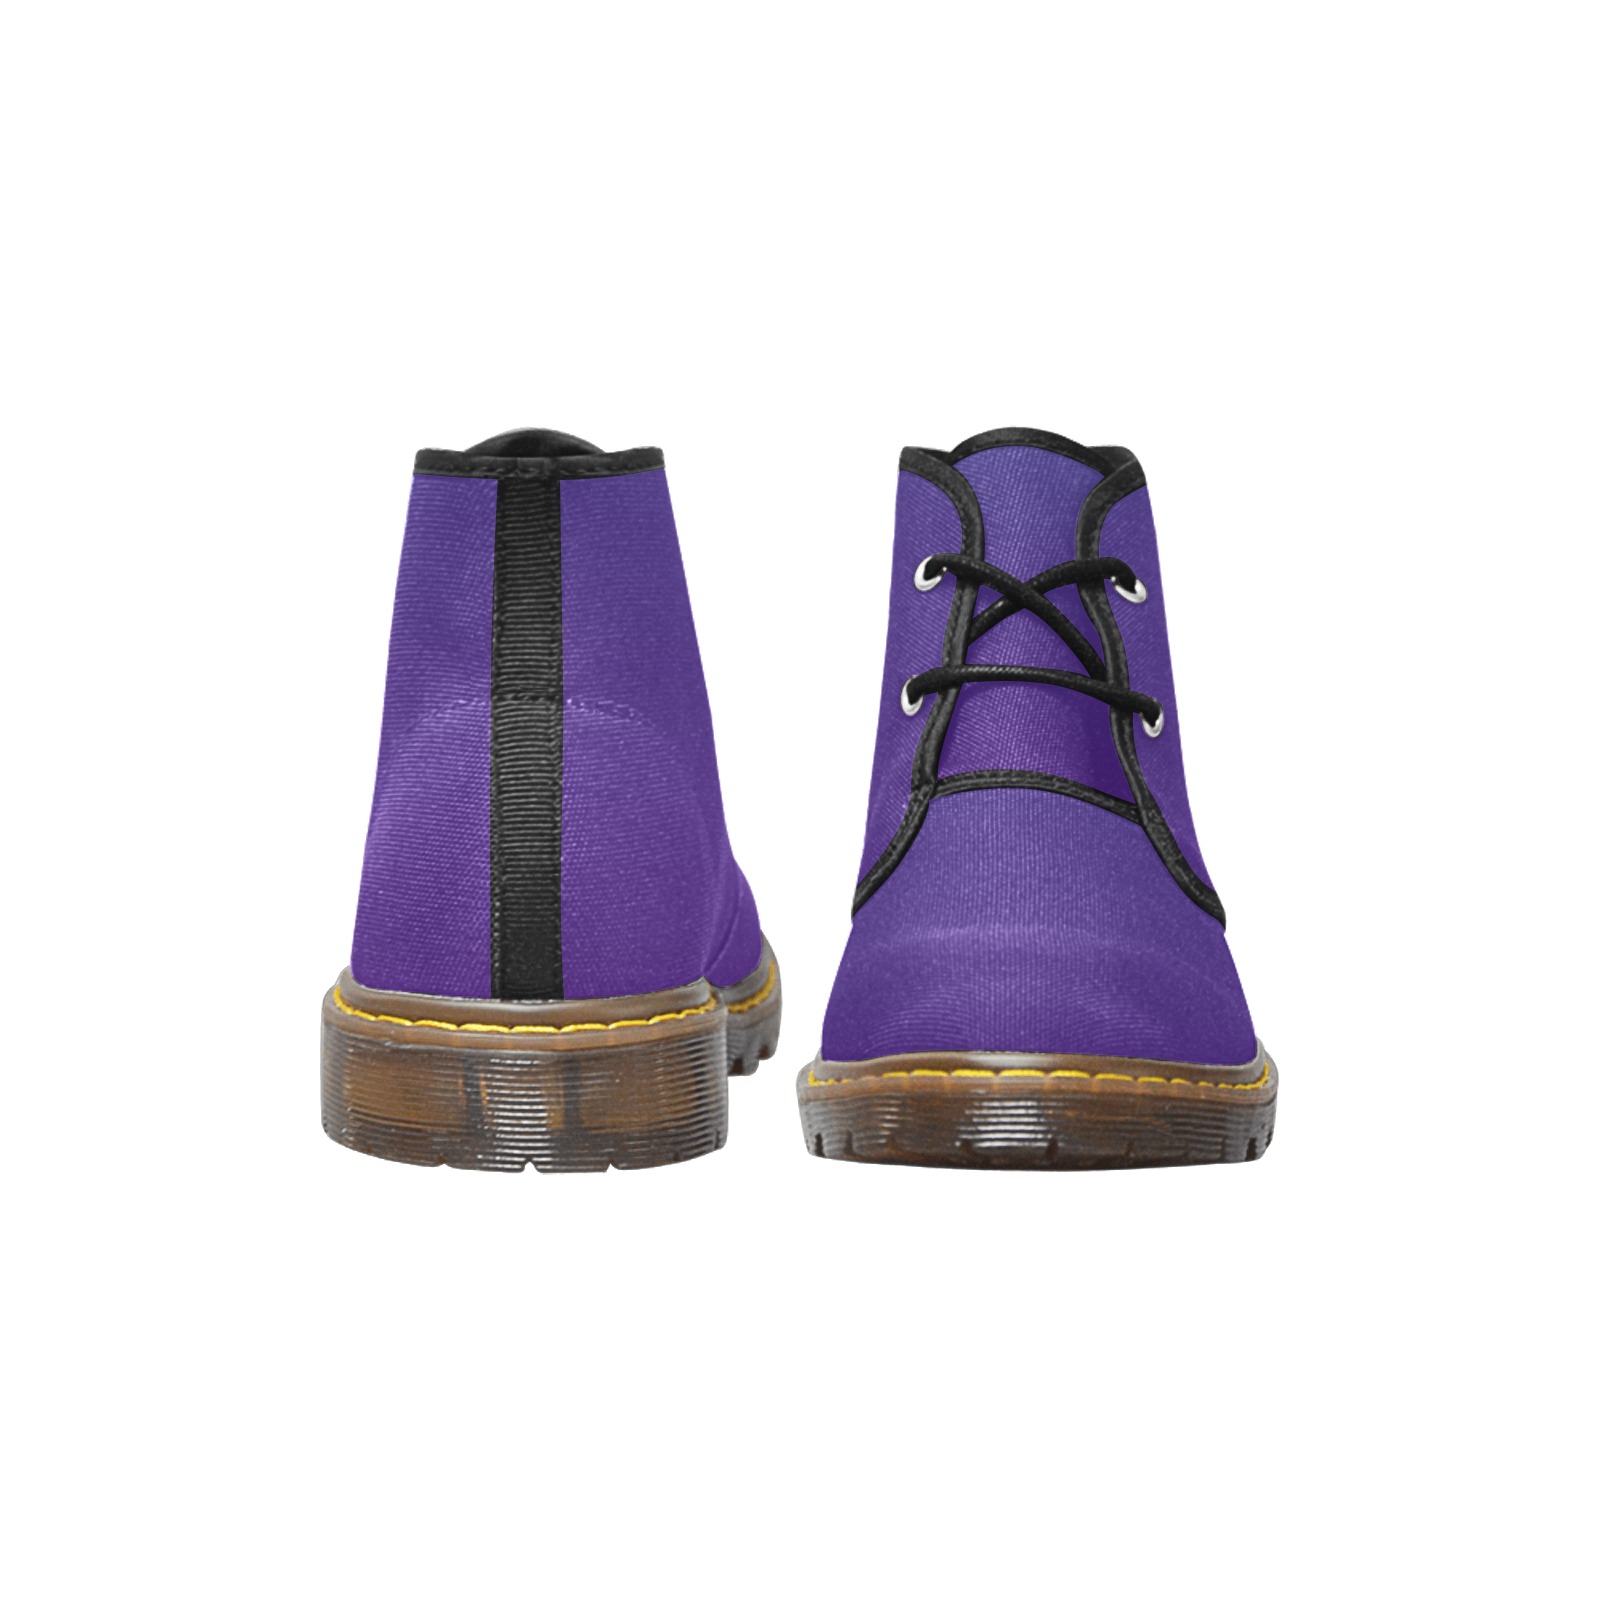 blu mau Men's Canvas Chukka Boots (Model 2402-1)